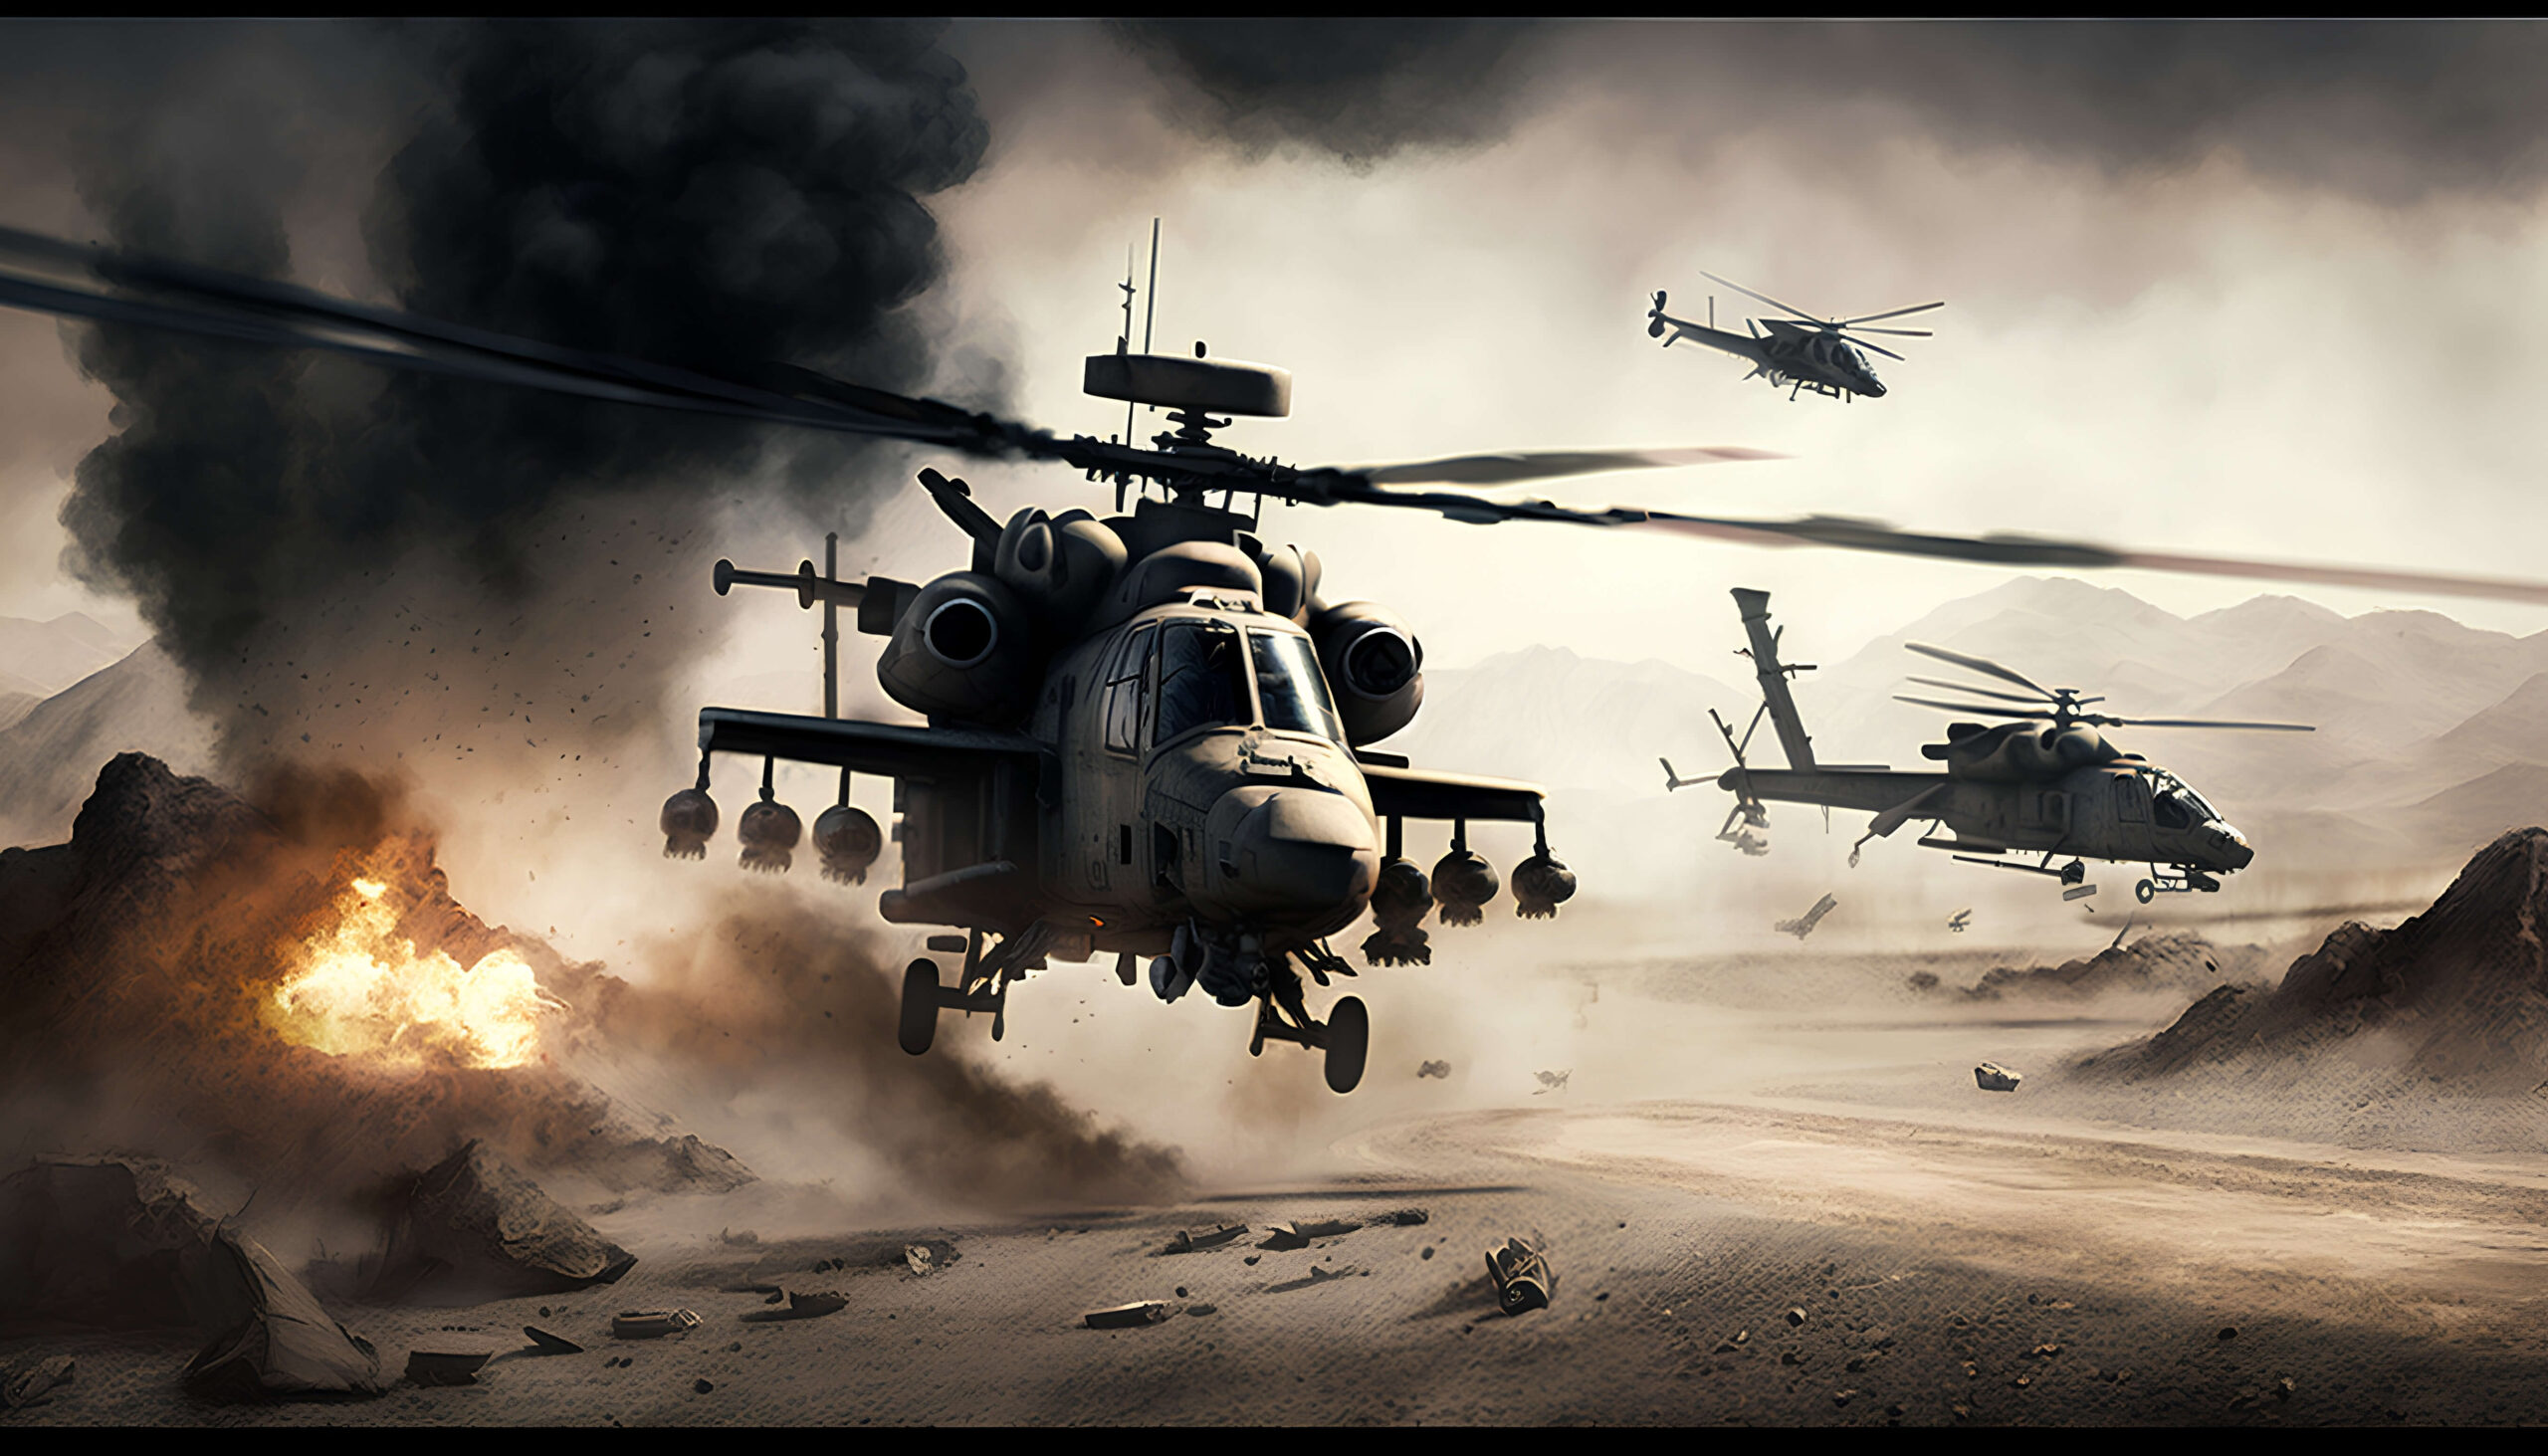 Battlefield Wallpaper, Military Helicopter, Army, Battle, War, Explosion Wallpaper